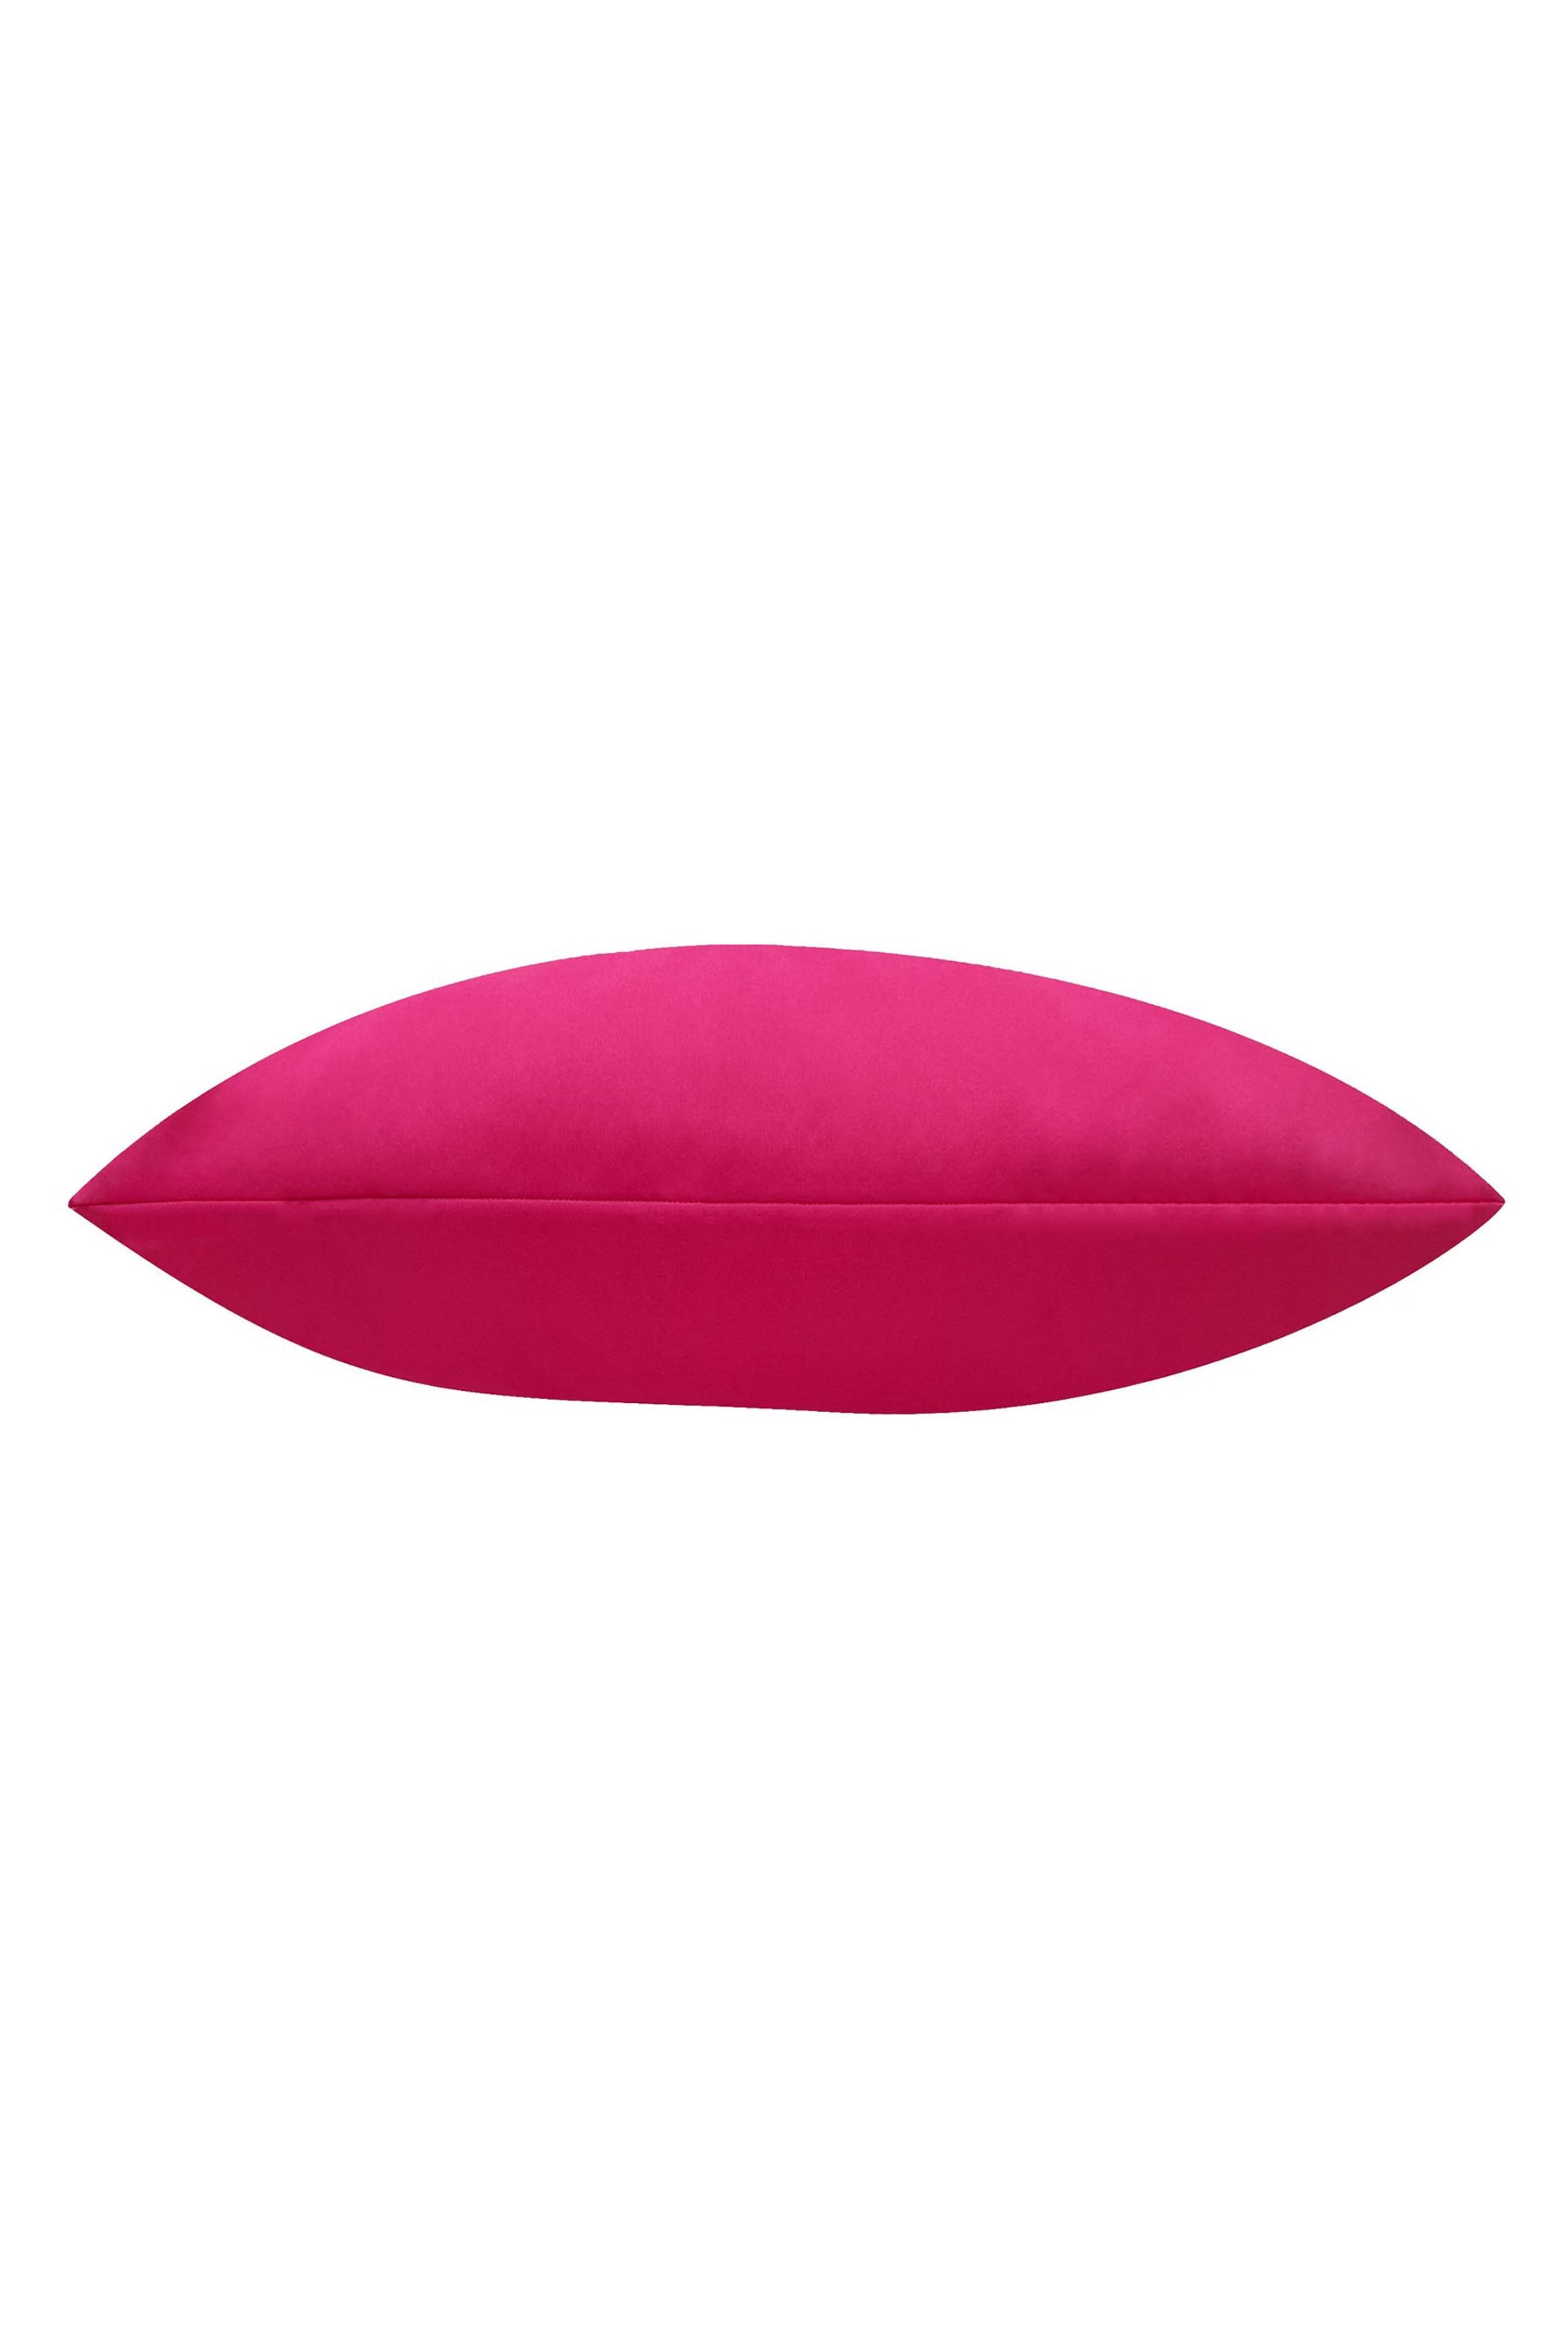 furn. Pink Plain Large Water UV Resistant Outdoor Floor Cushion - Image 2 of 3